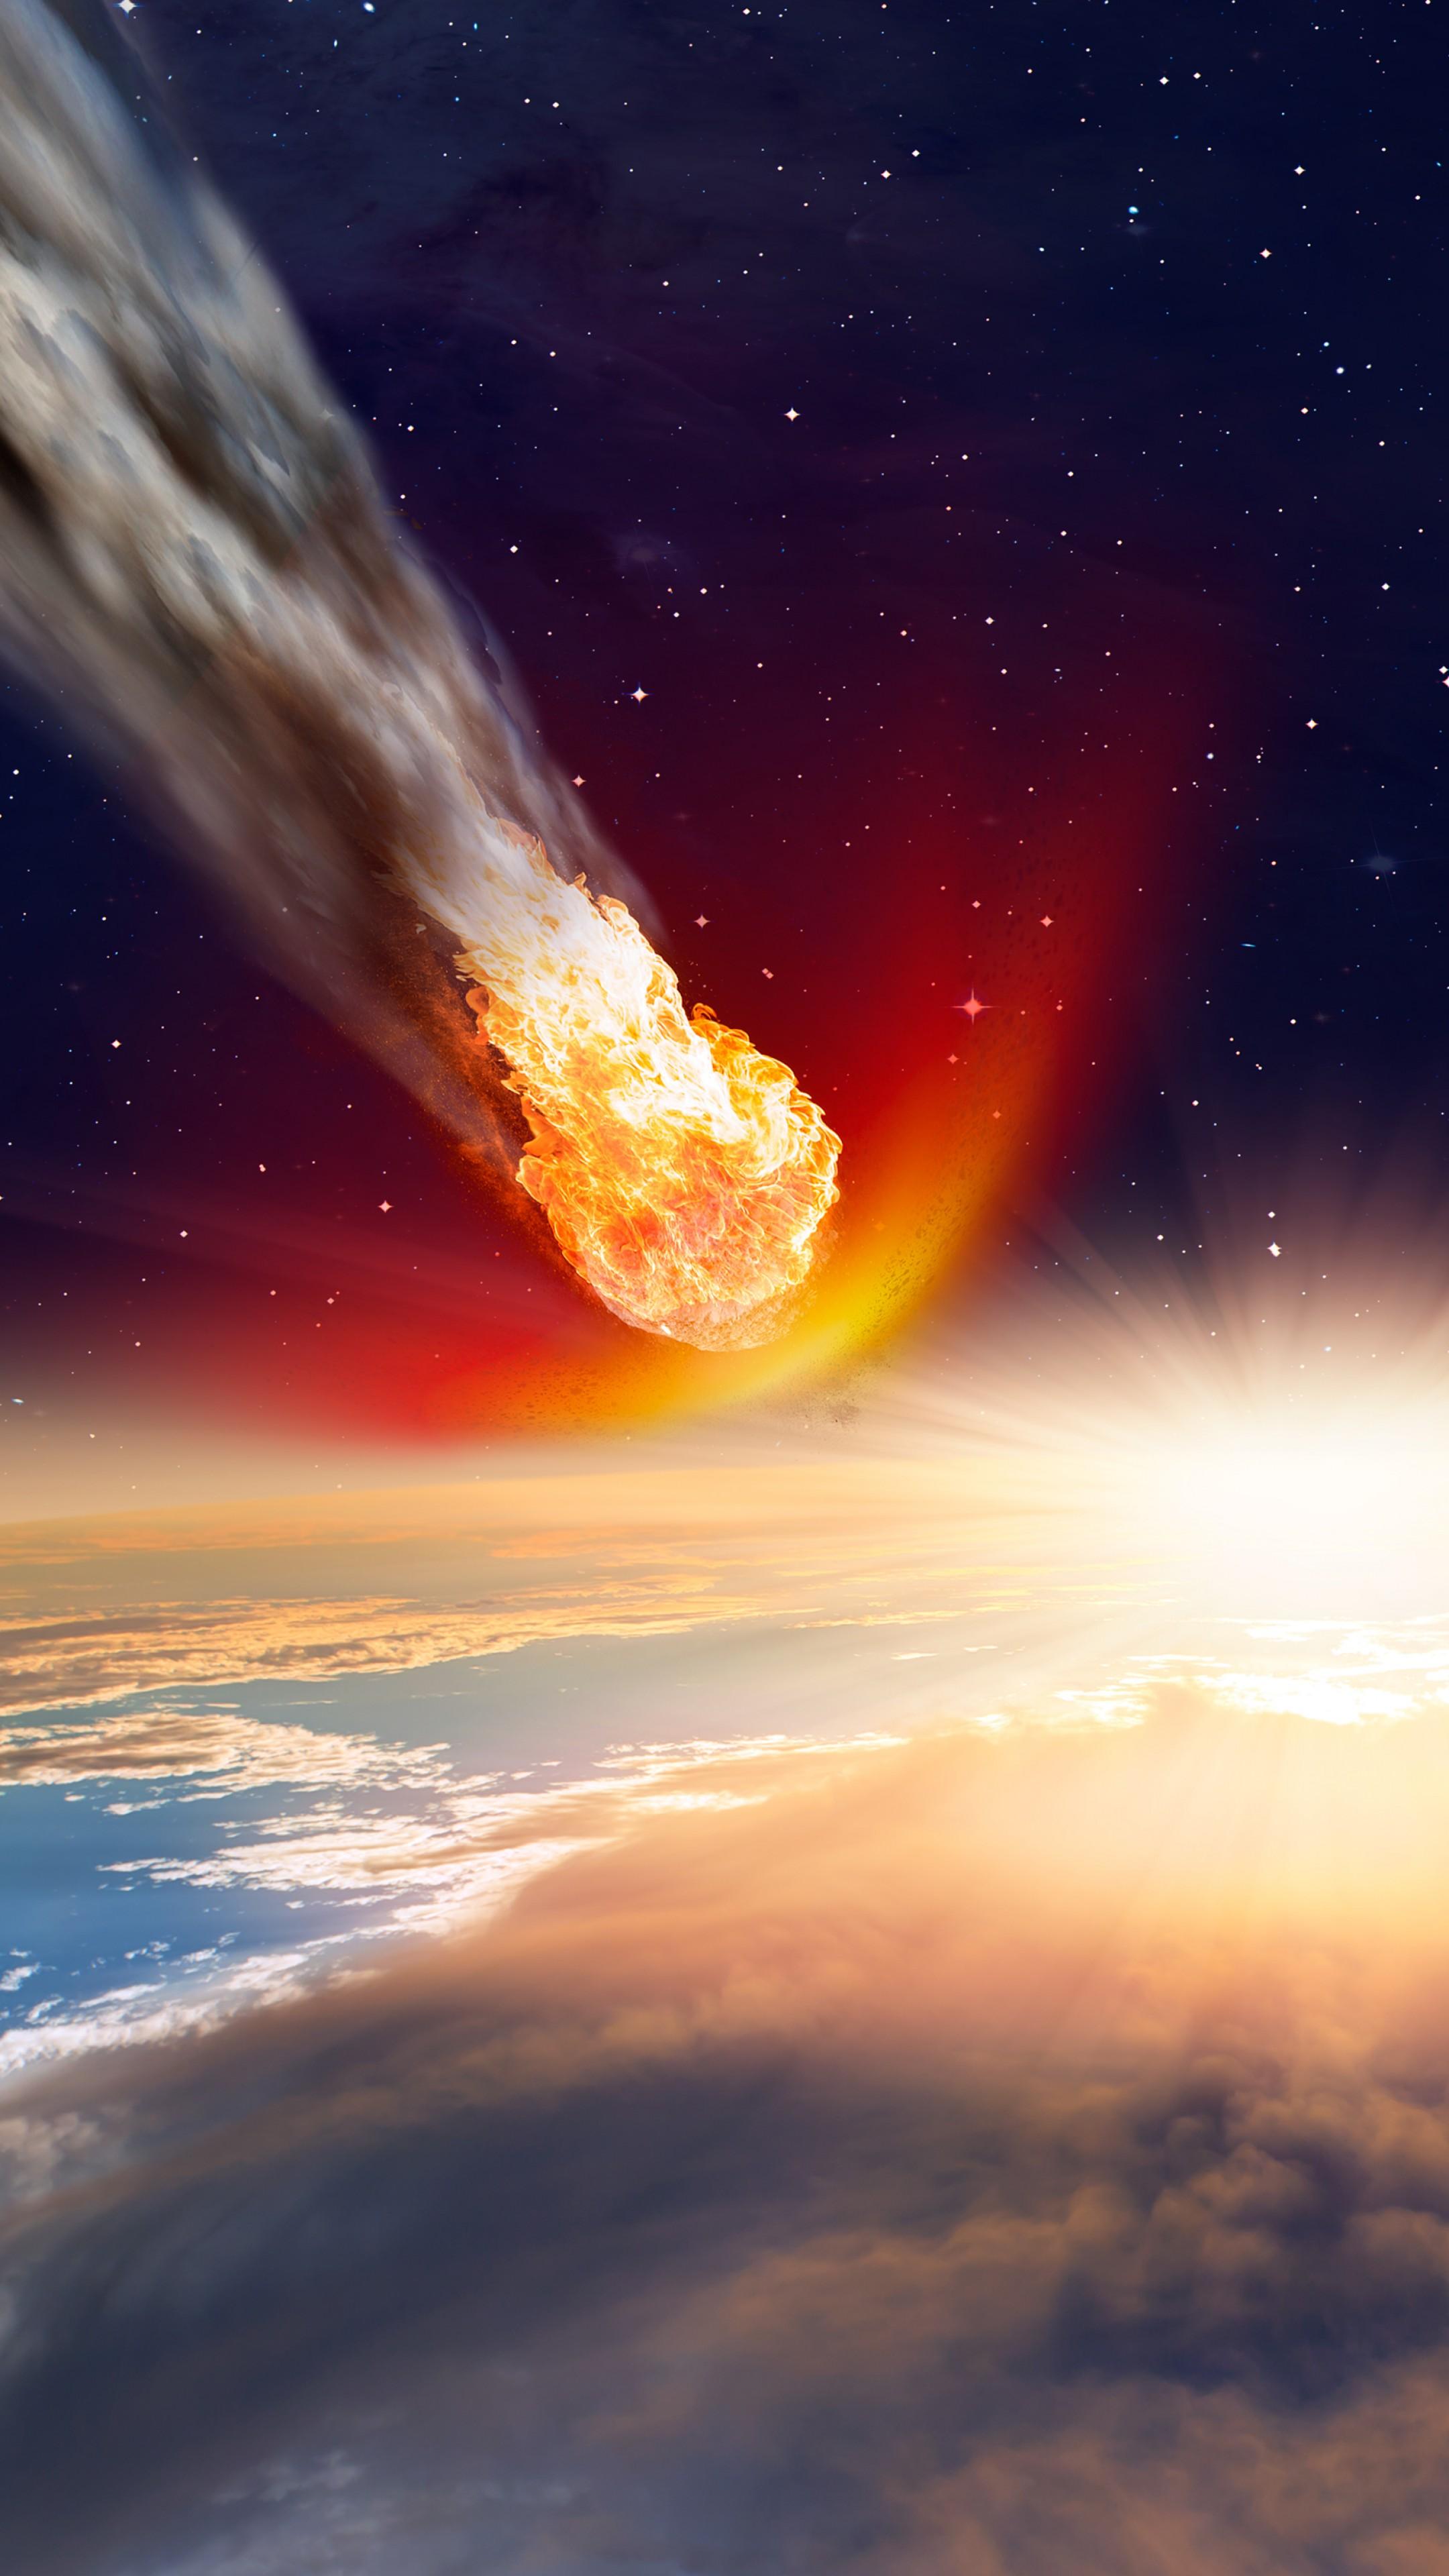 Wallpaper asteroid of death, 11 Jul MC 4k, Space